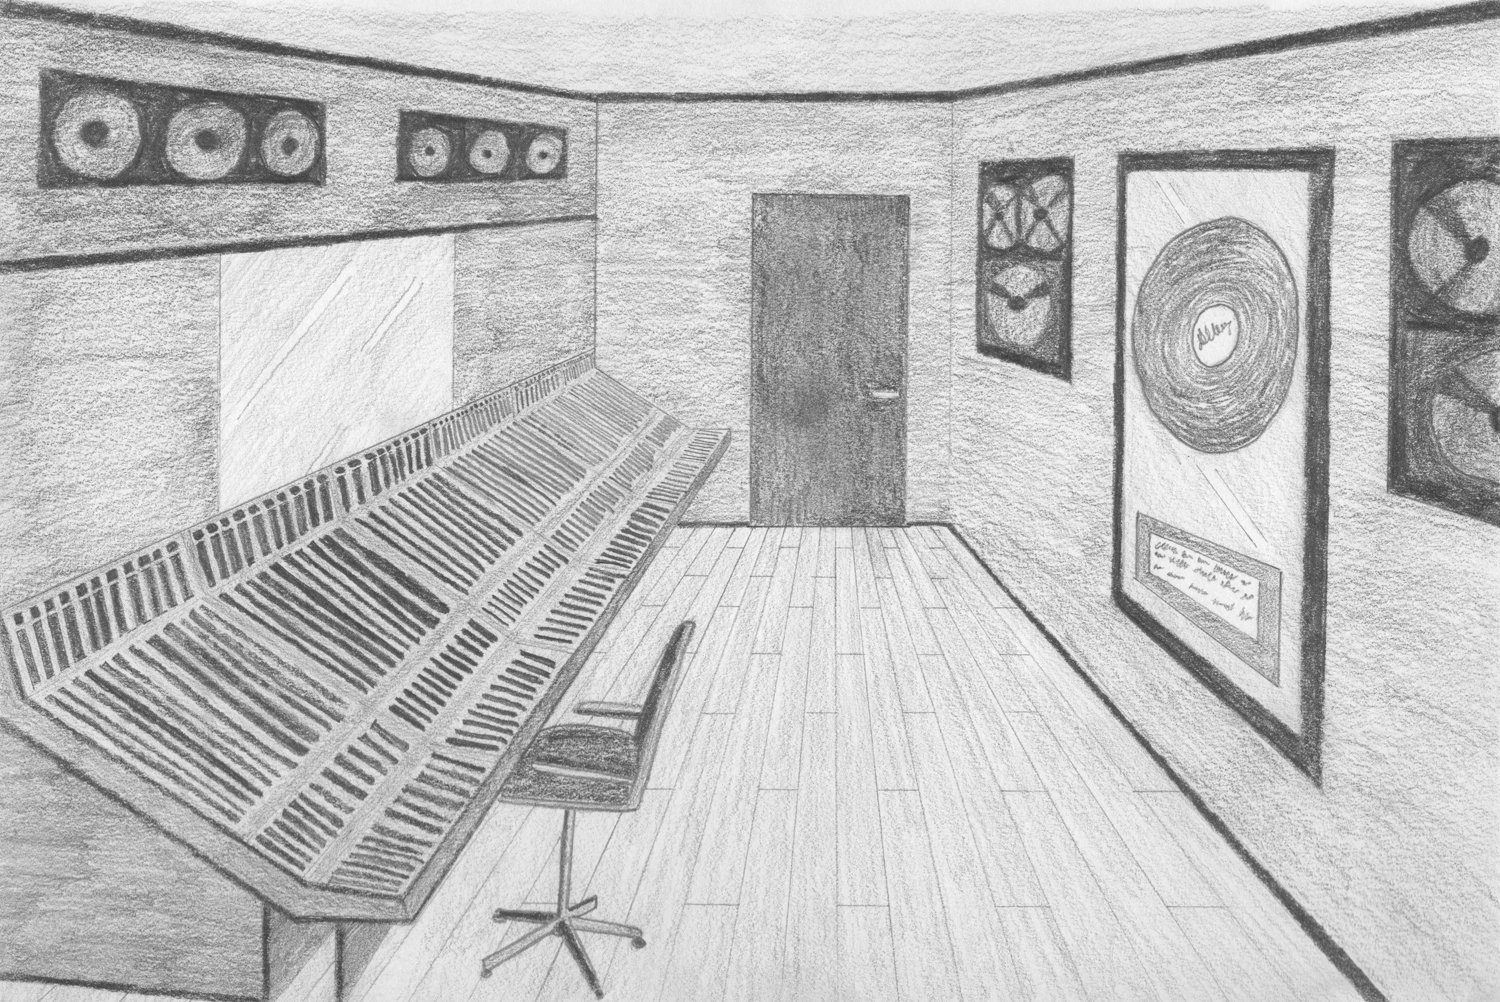 Recording Studio Sketch at Explore collection of